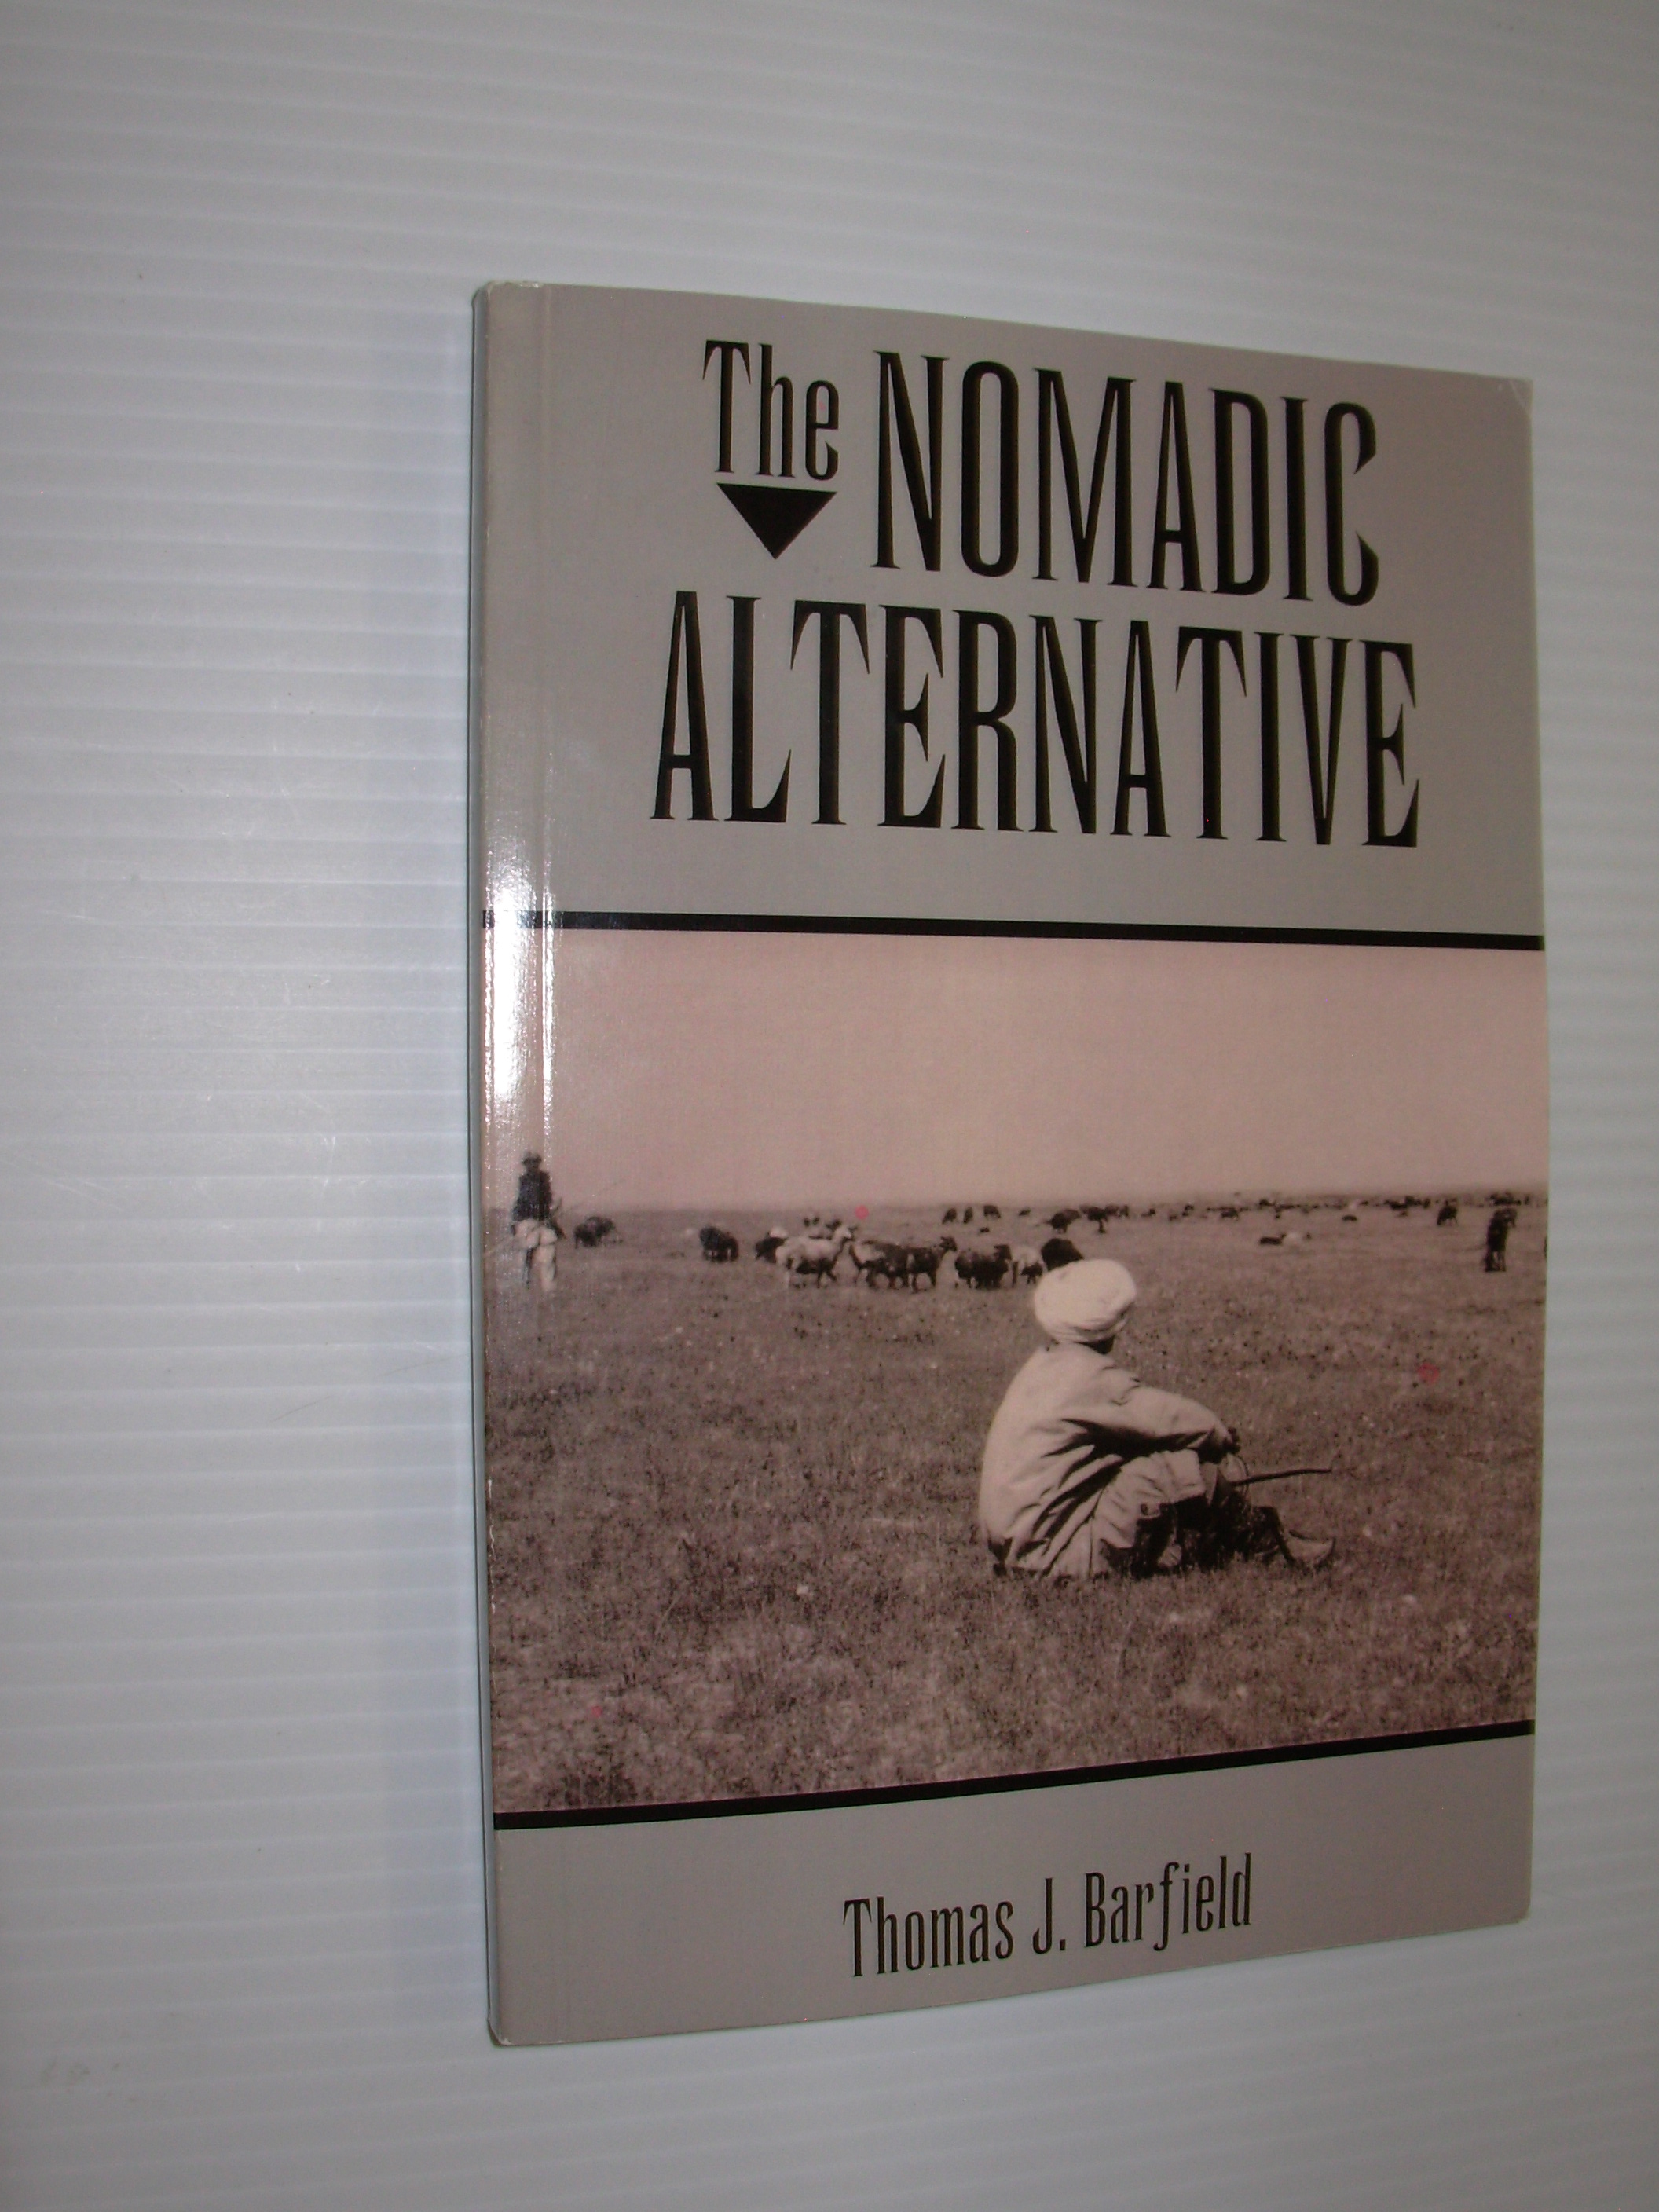 The Nomadic Alternative - Thomas J. Barfield